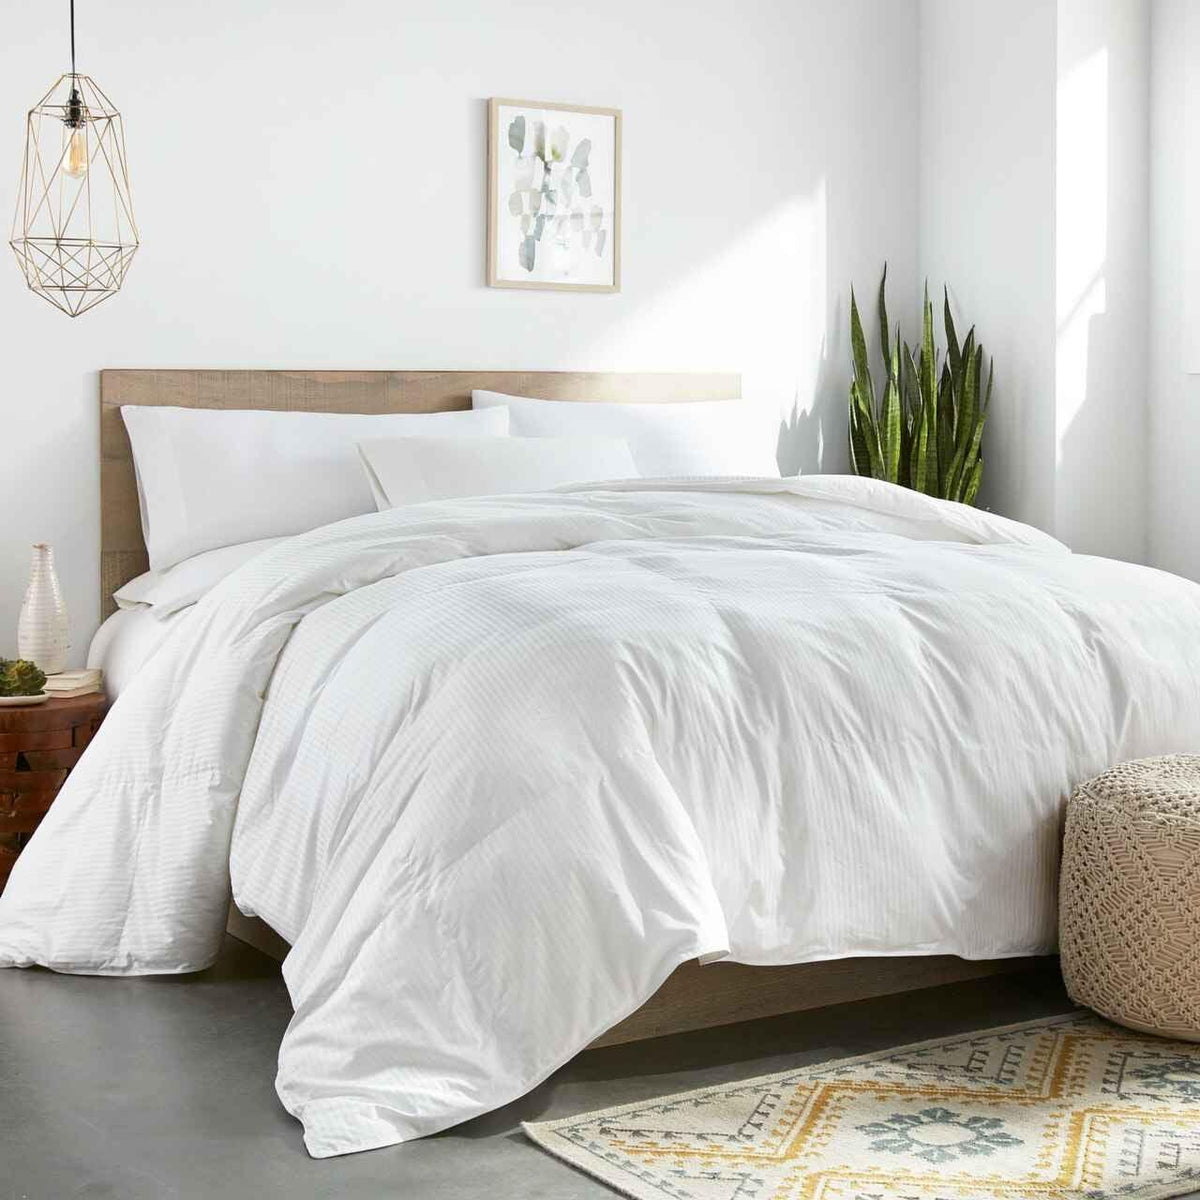 World’s Biggest Comforter - 10' x 10' Colossal All Season Down Alternative Comforter with Duvet Tabs (Hypoallergenic) - beddingbag.com